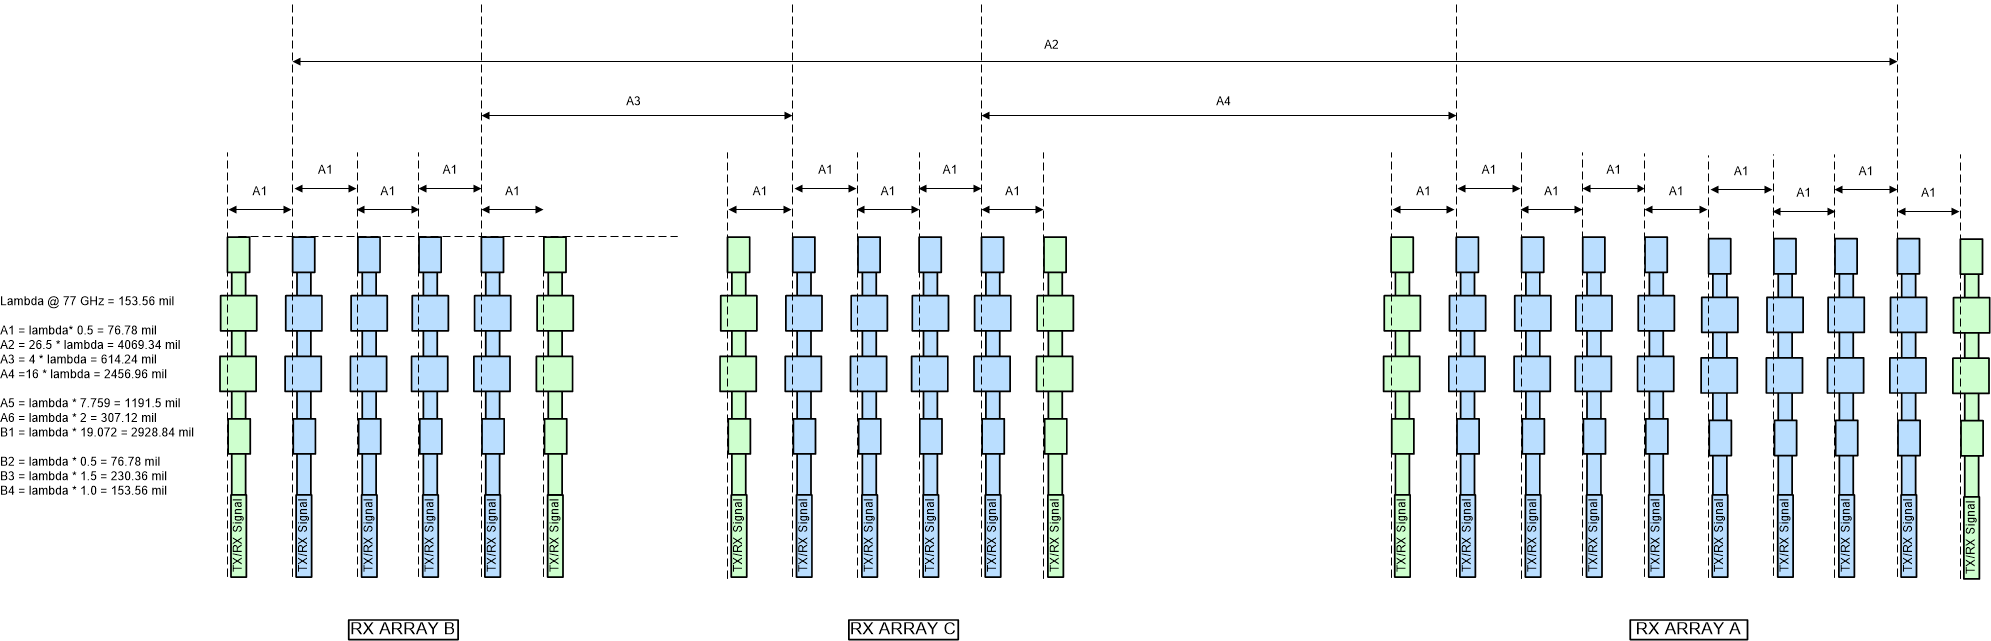 swru553-cascade-rf-design-spec-diagrams-rx-array-drawing.gif